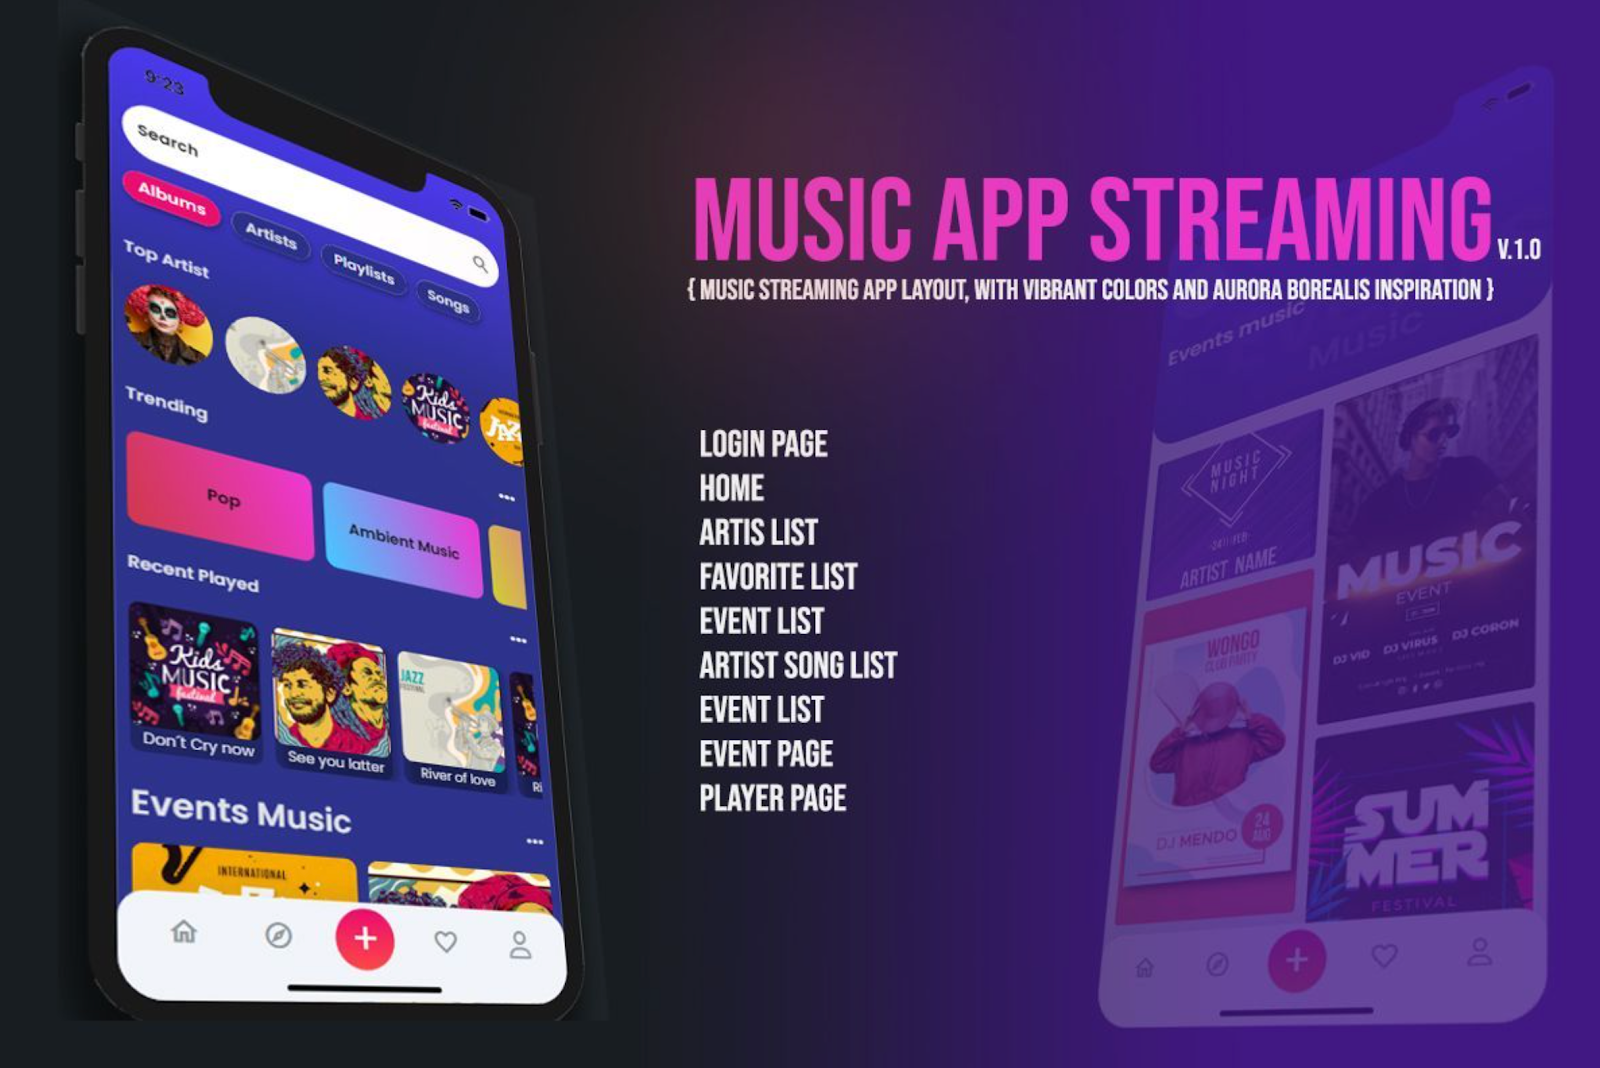 6. Music App Streaming